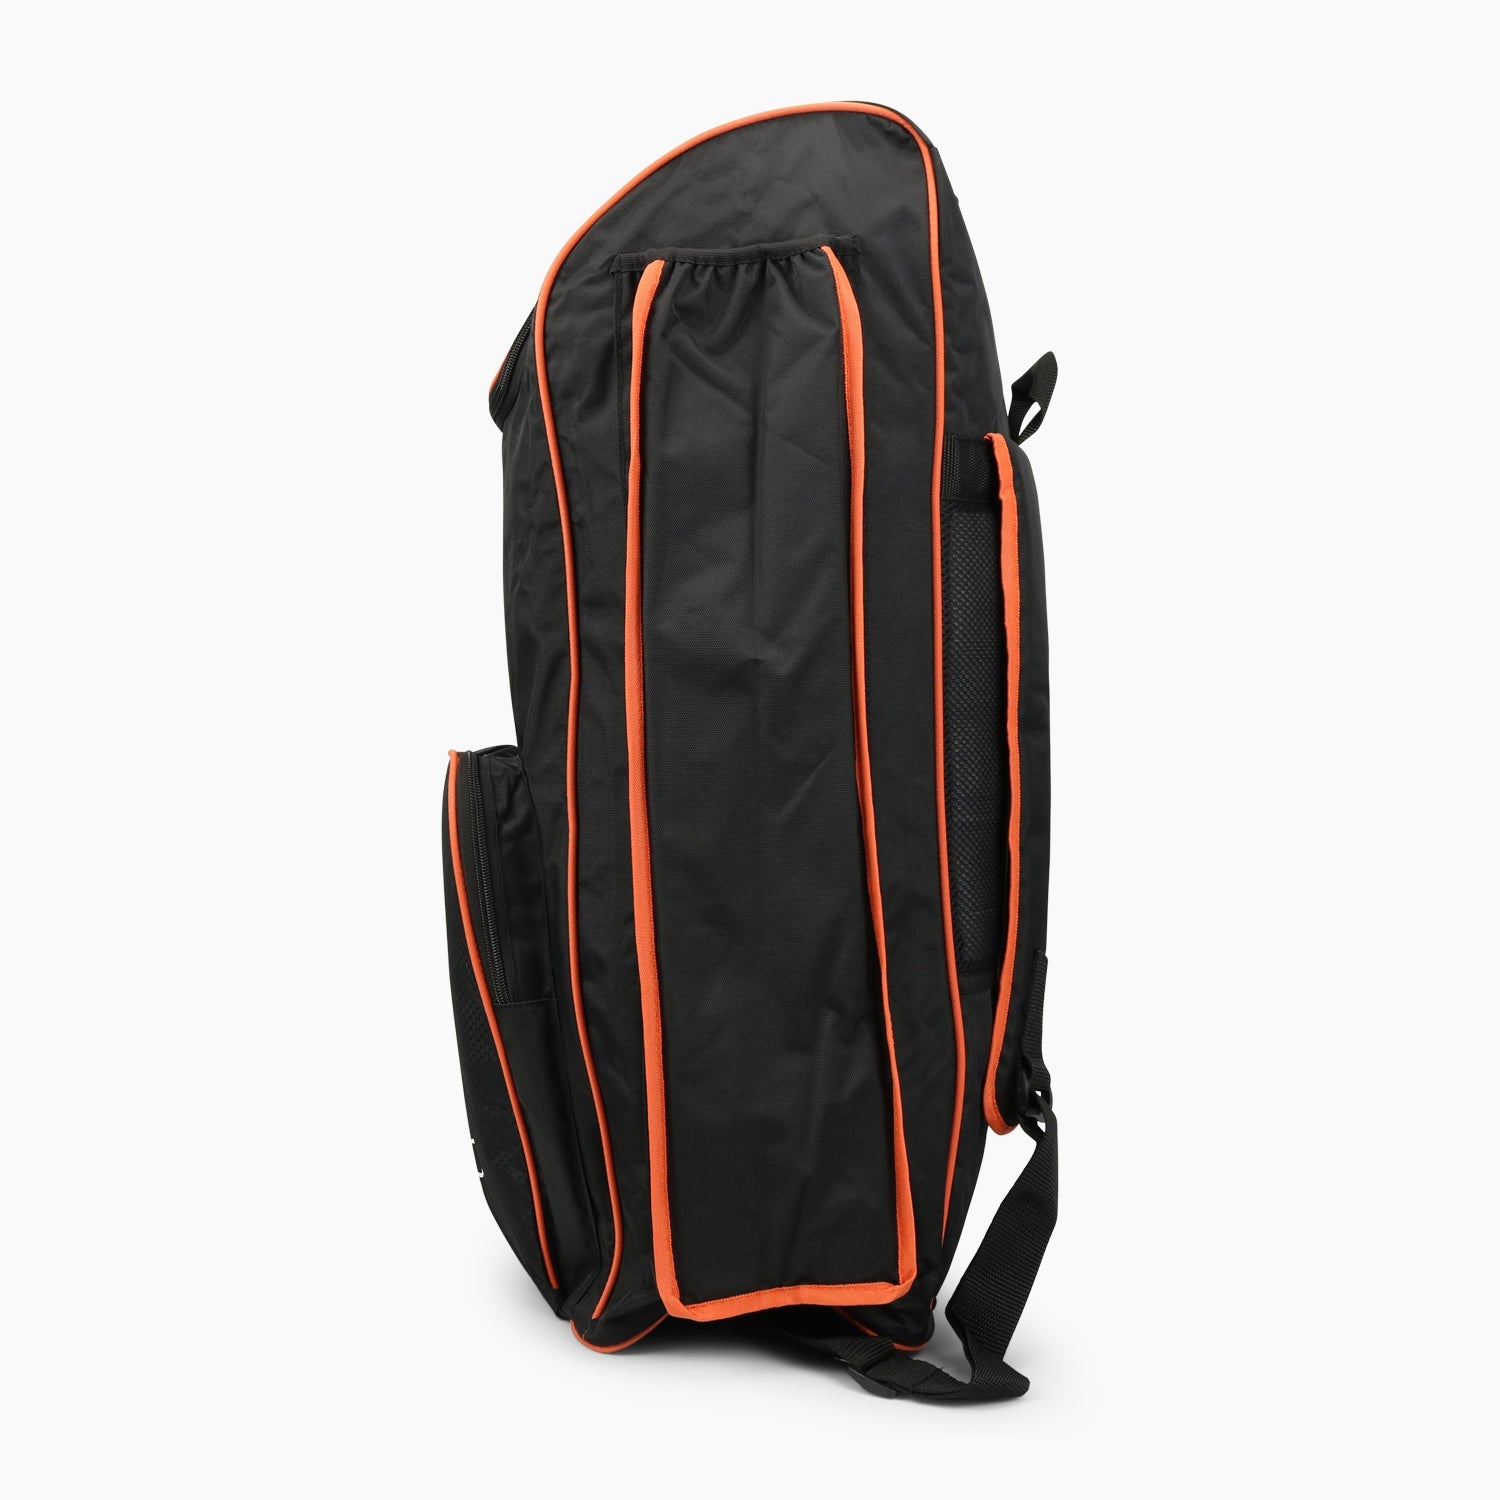 Buy Heritage Titan Duffle Cricket Bag - HC50-Sports Bag-Heritage-Splay UK Online